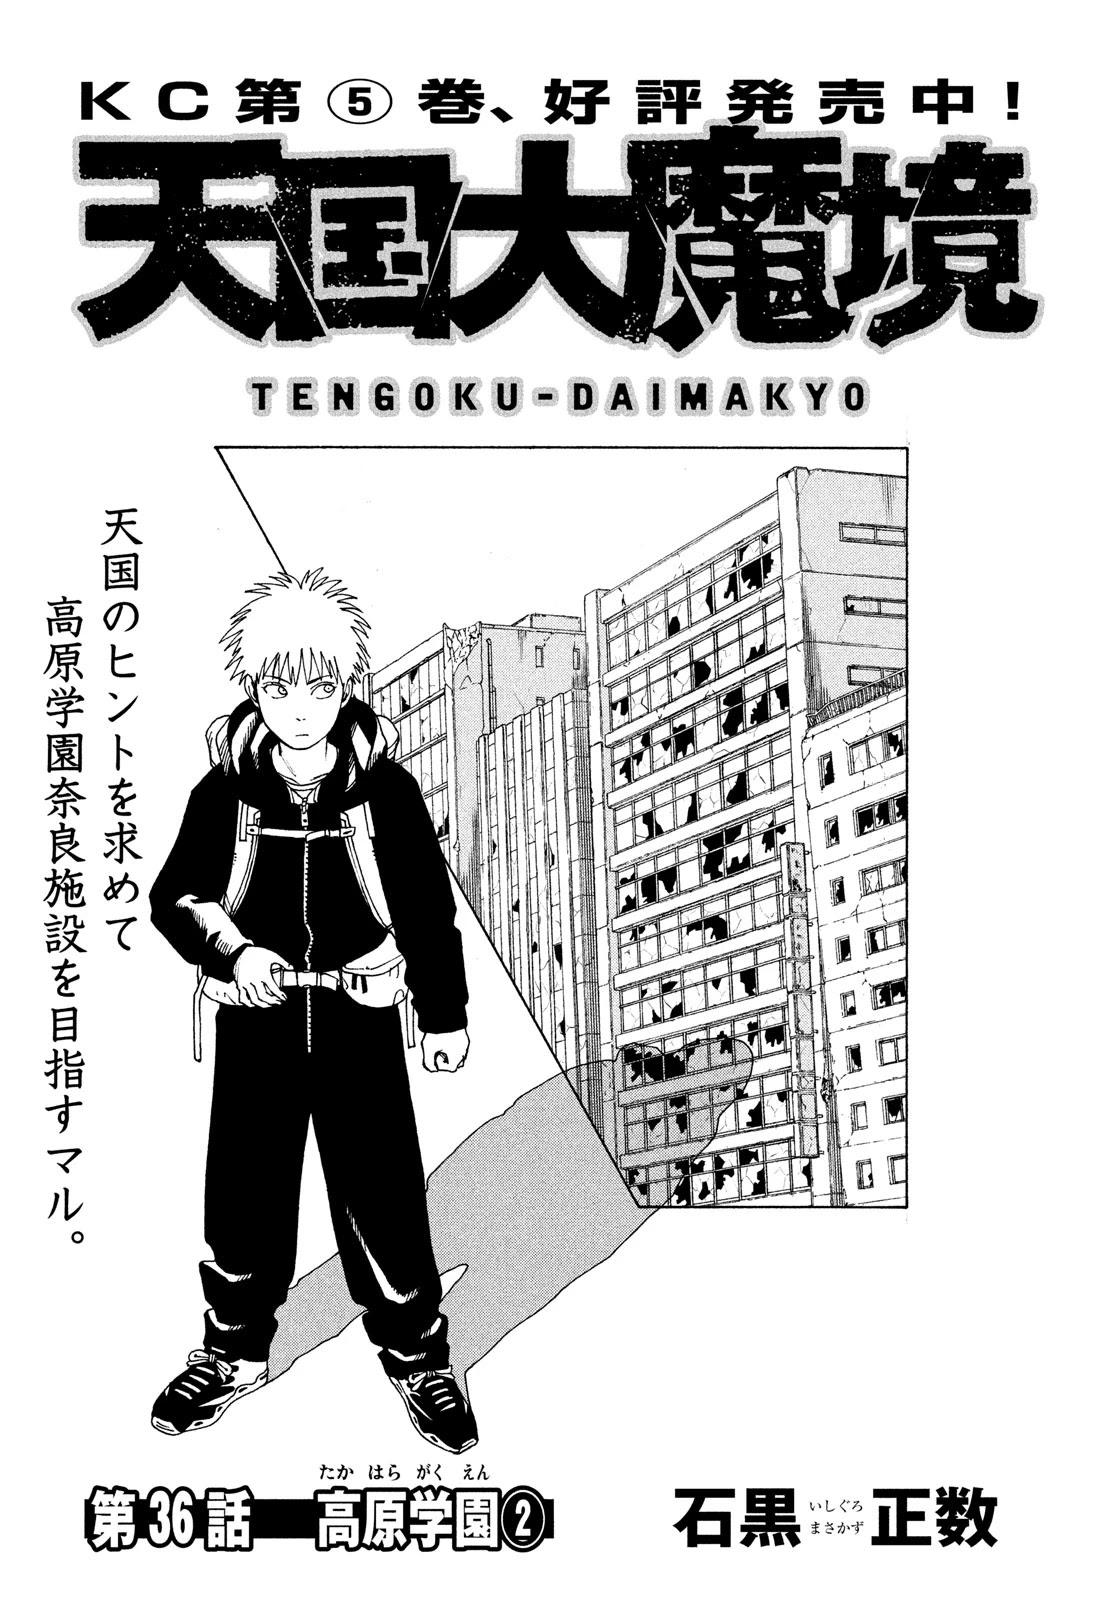 Tengoku Daimakyou Manga Online Free - Manganelo